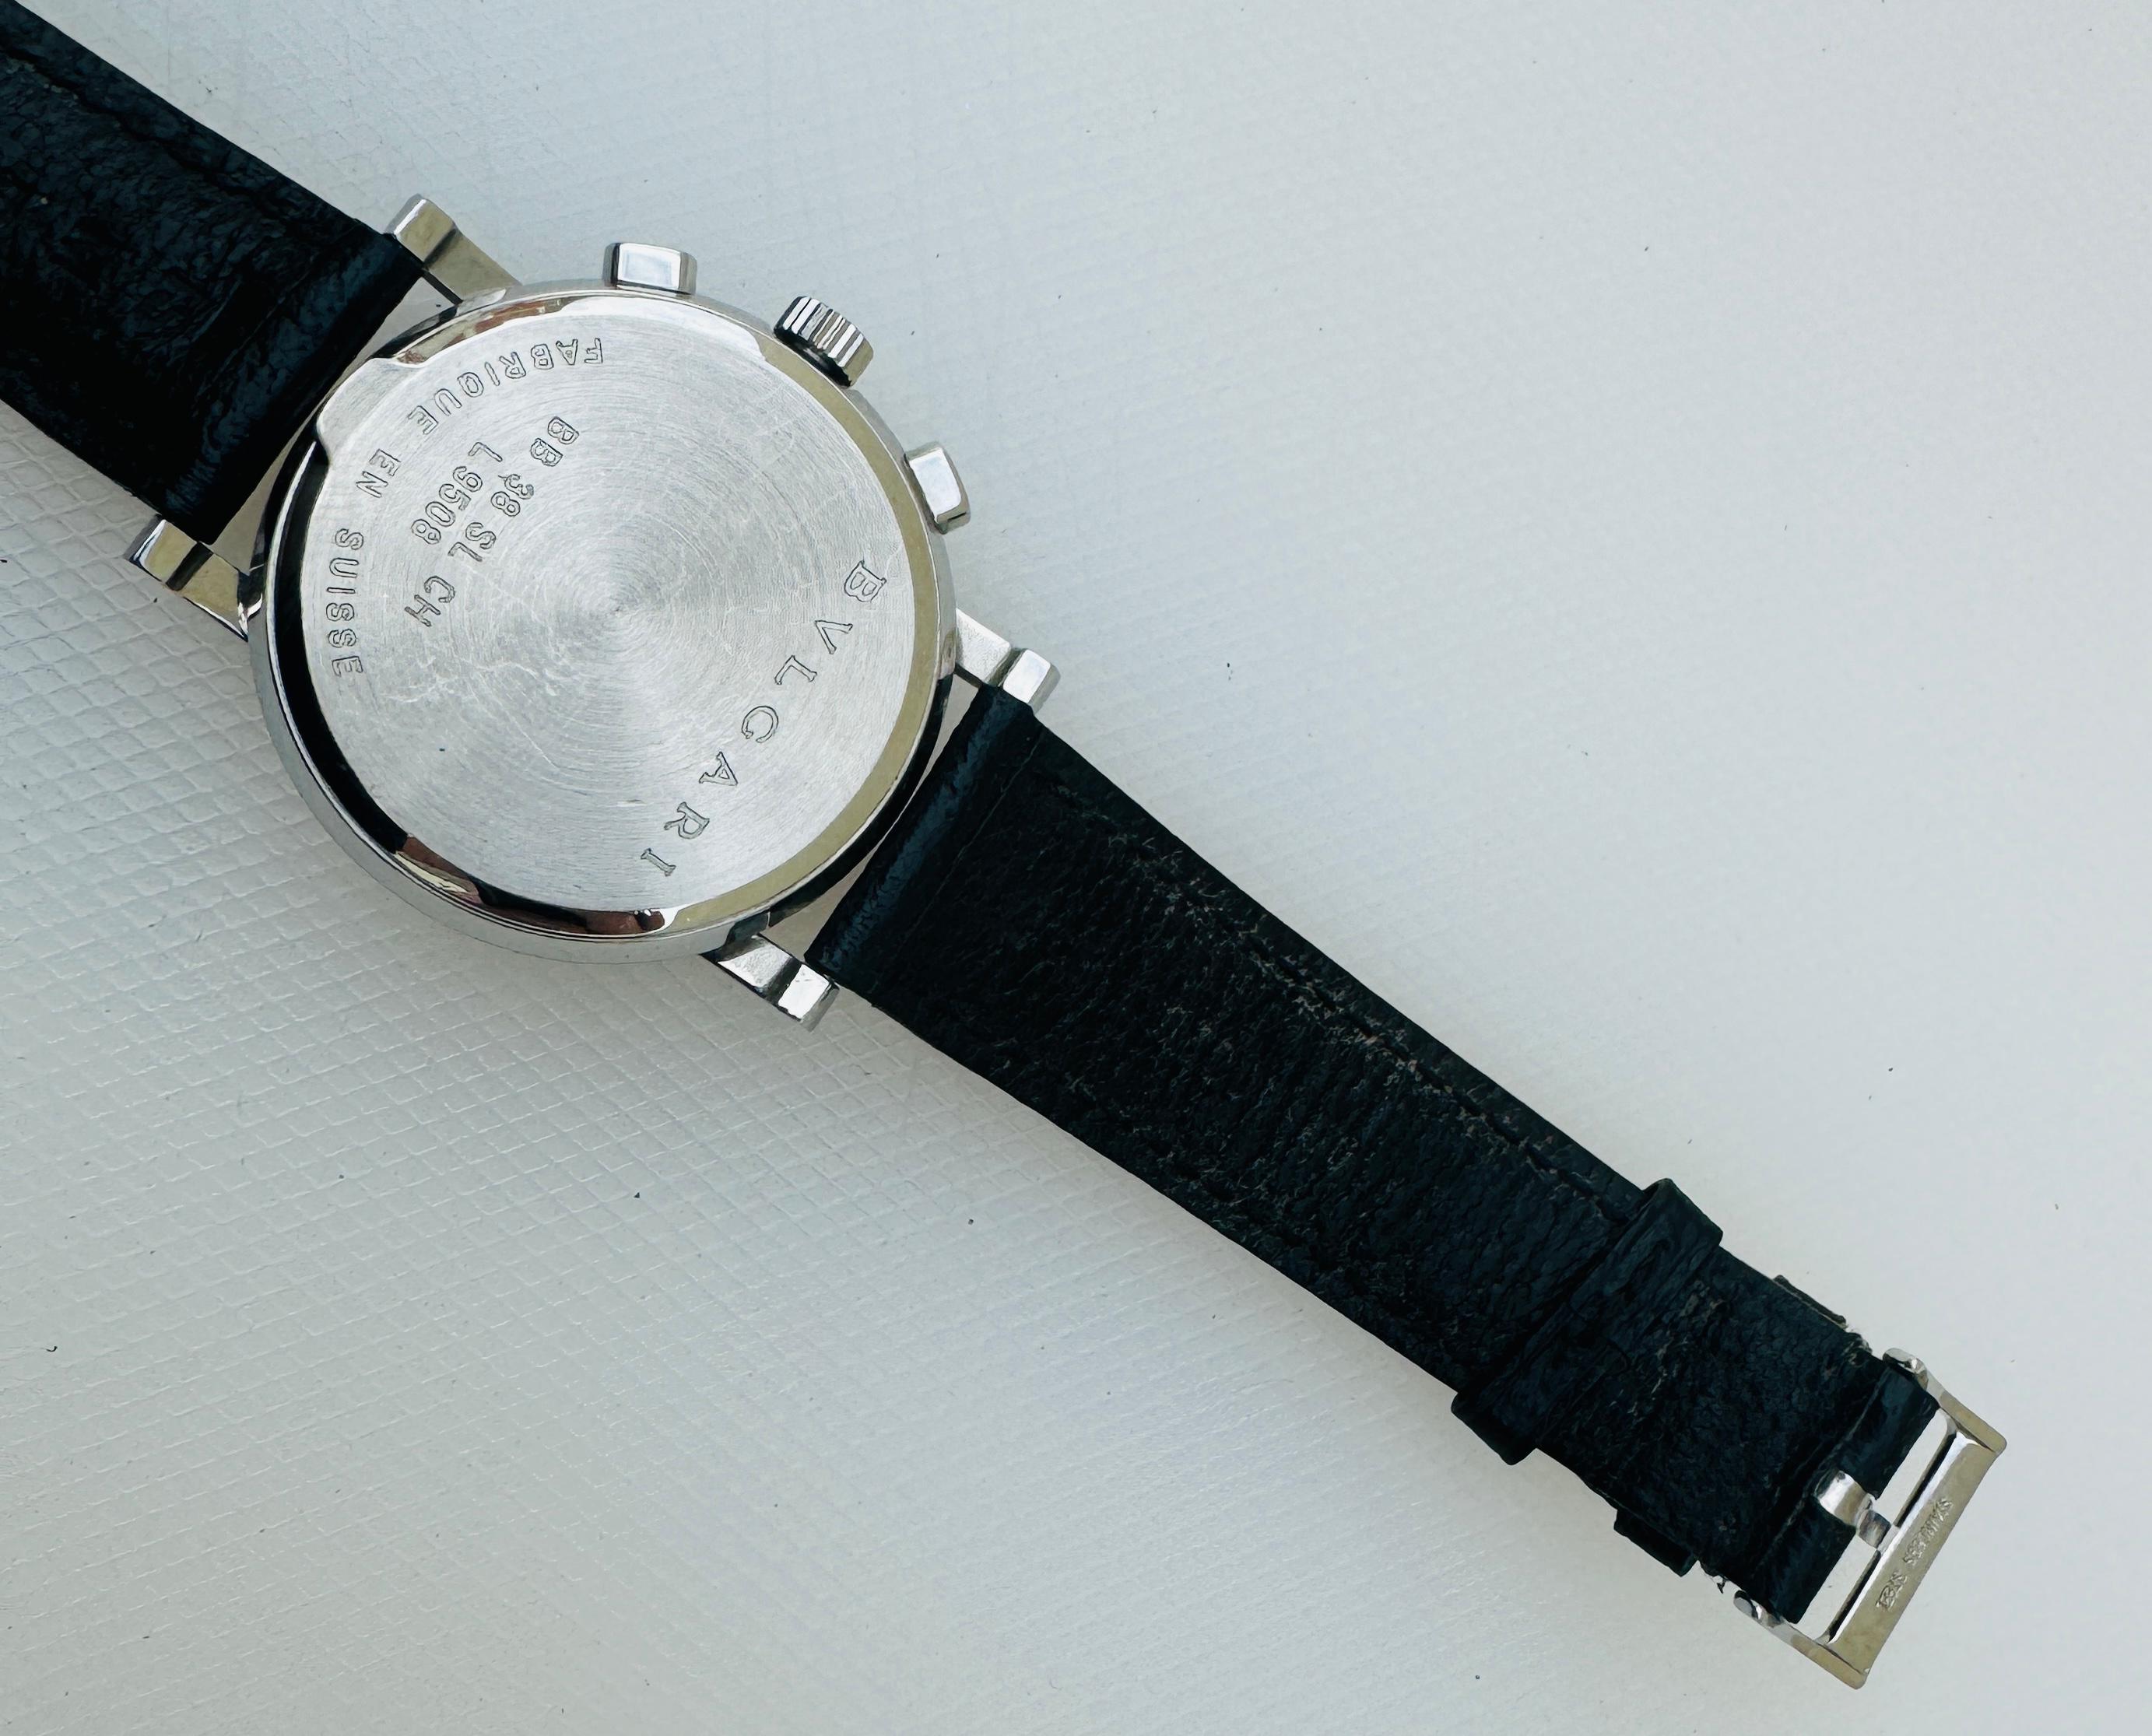 Bulgari Diagono Bvlgari Chronograph Automatic Watch For Sale 6